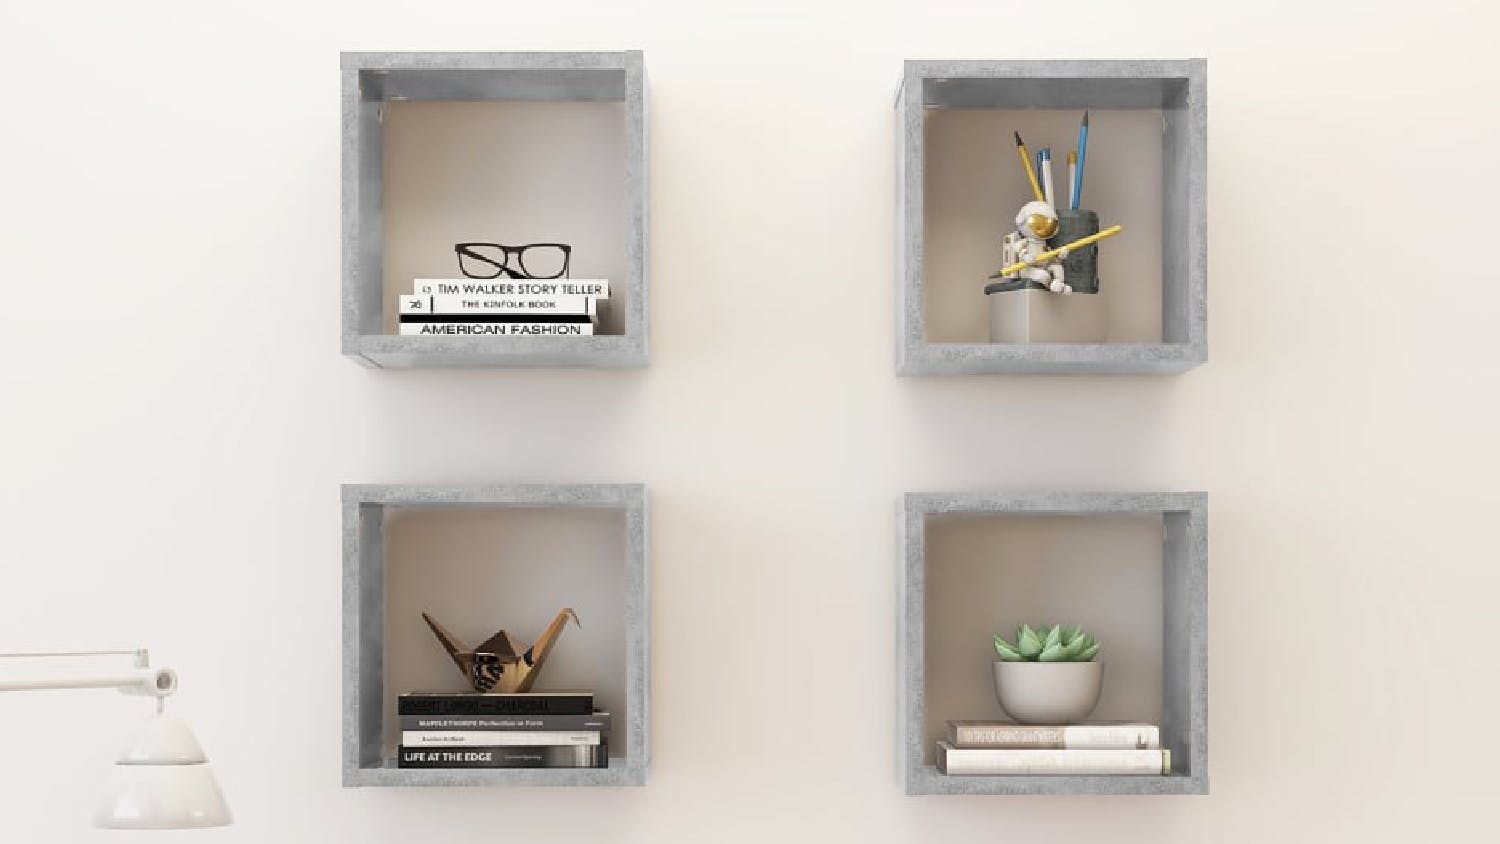 NNEVL Wall Shelves Floating Cube 4pcs. 26 x 15 x 26 - Concrete Grey